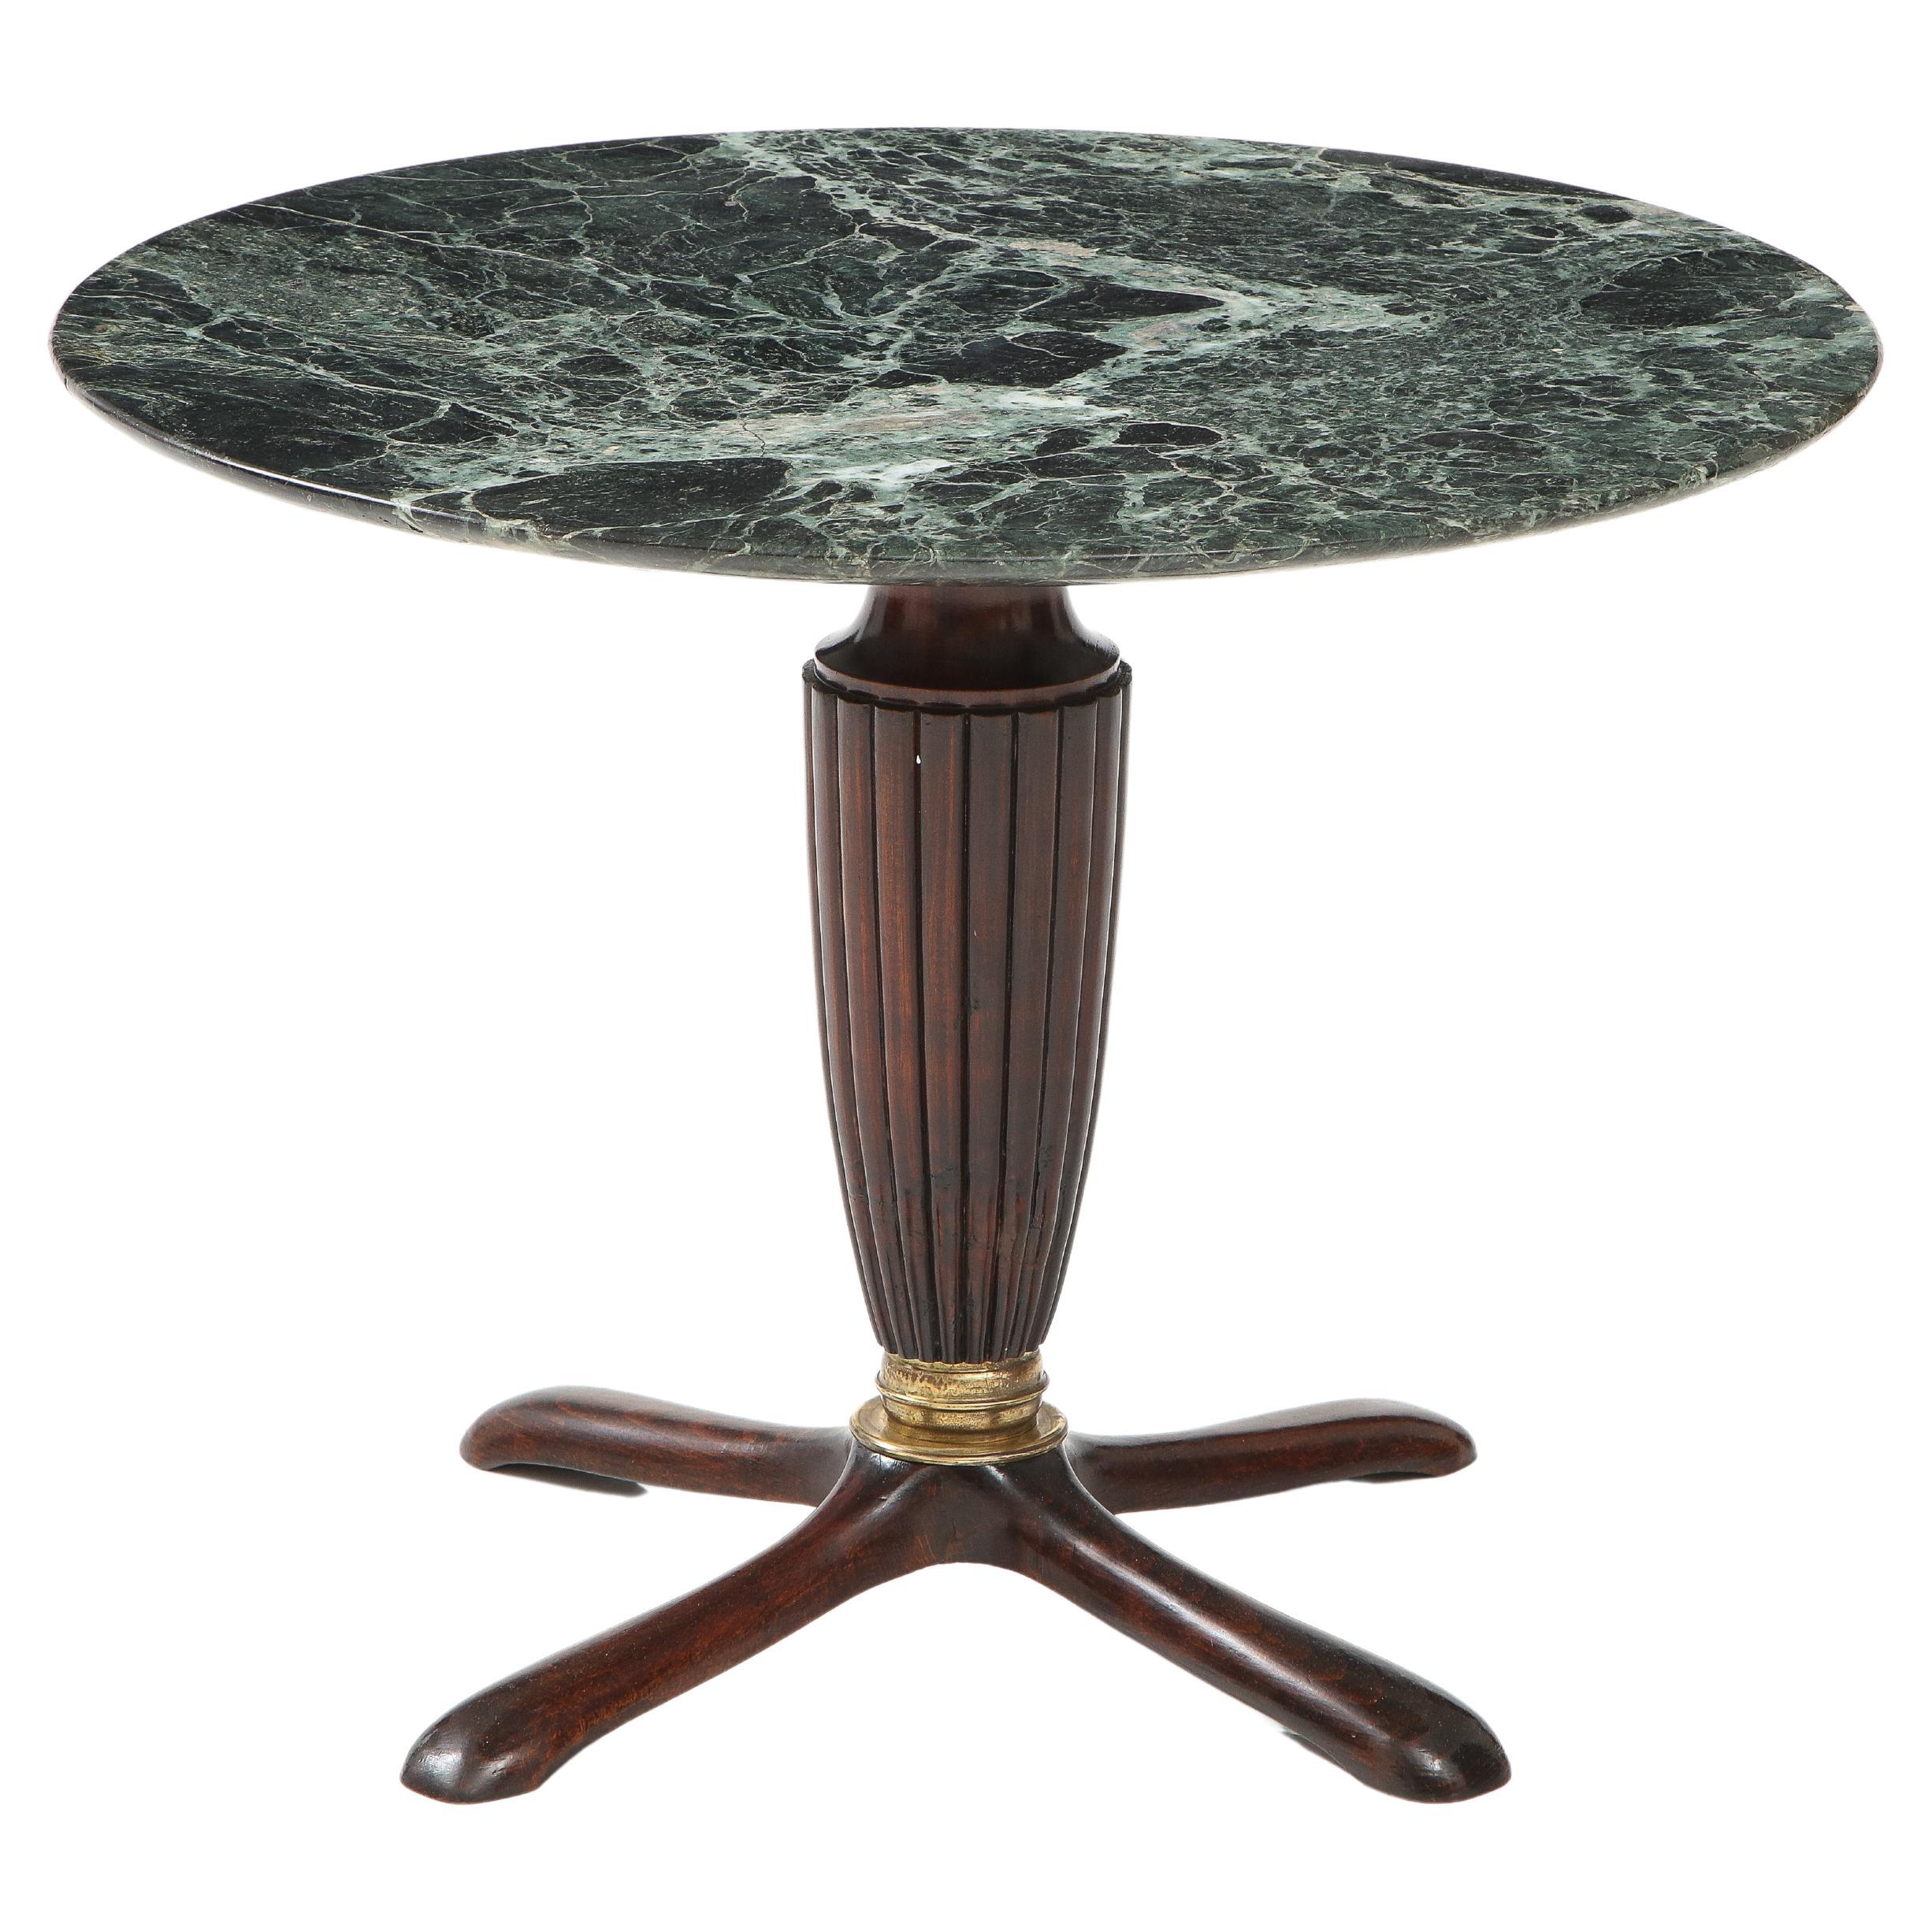 Italian Mahogany Circular Side Table with Verdi Alpi Marble Top, 1940's For Sale